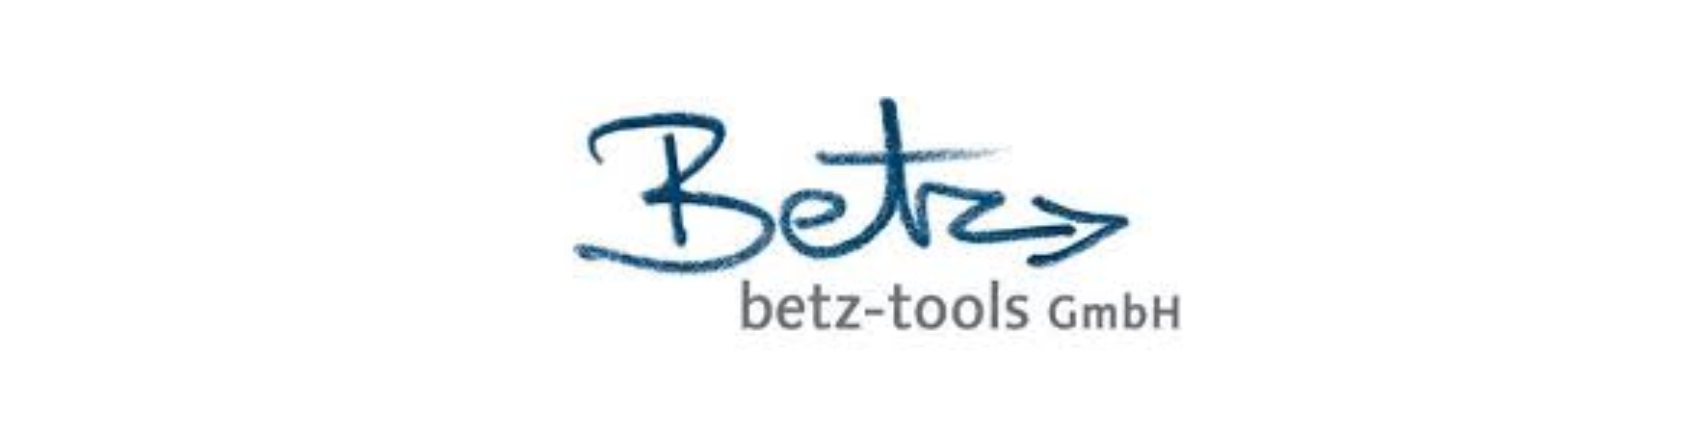 BETZ logo Catts Camera